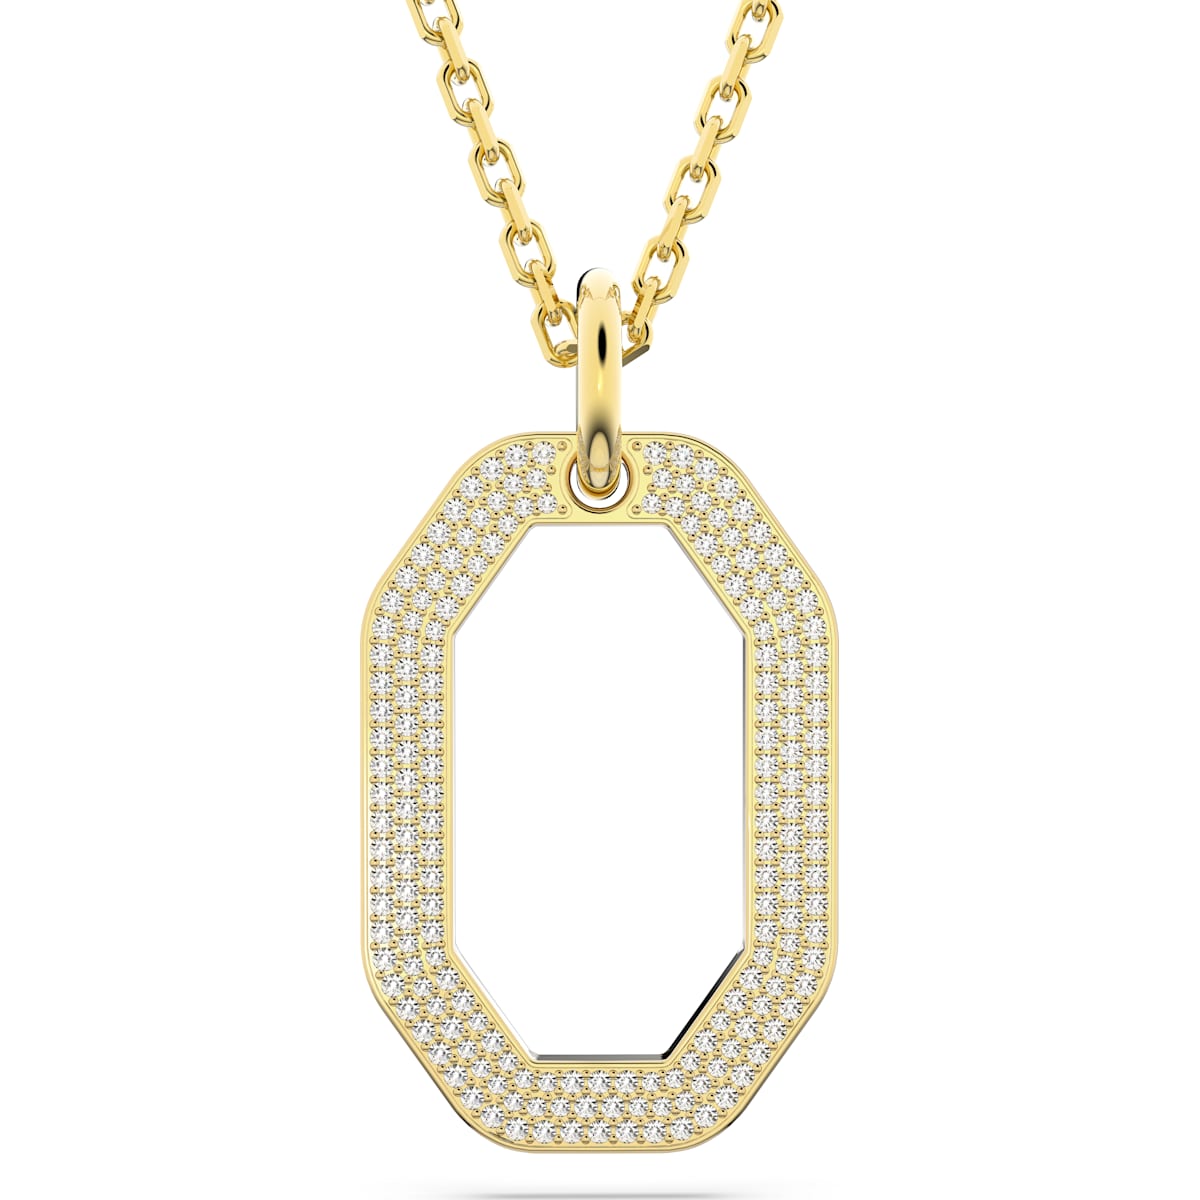 Swarovski Dextera pendant, Octagon shape, White, Gold-tone plated 5642387- Discontinued